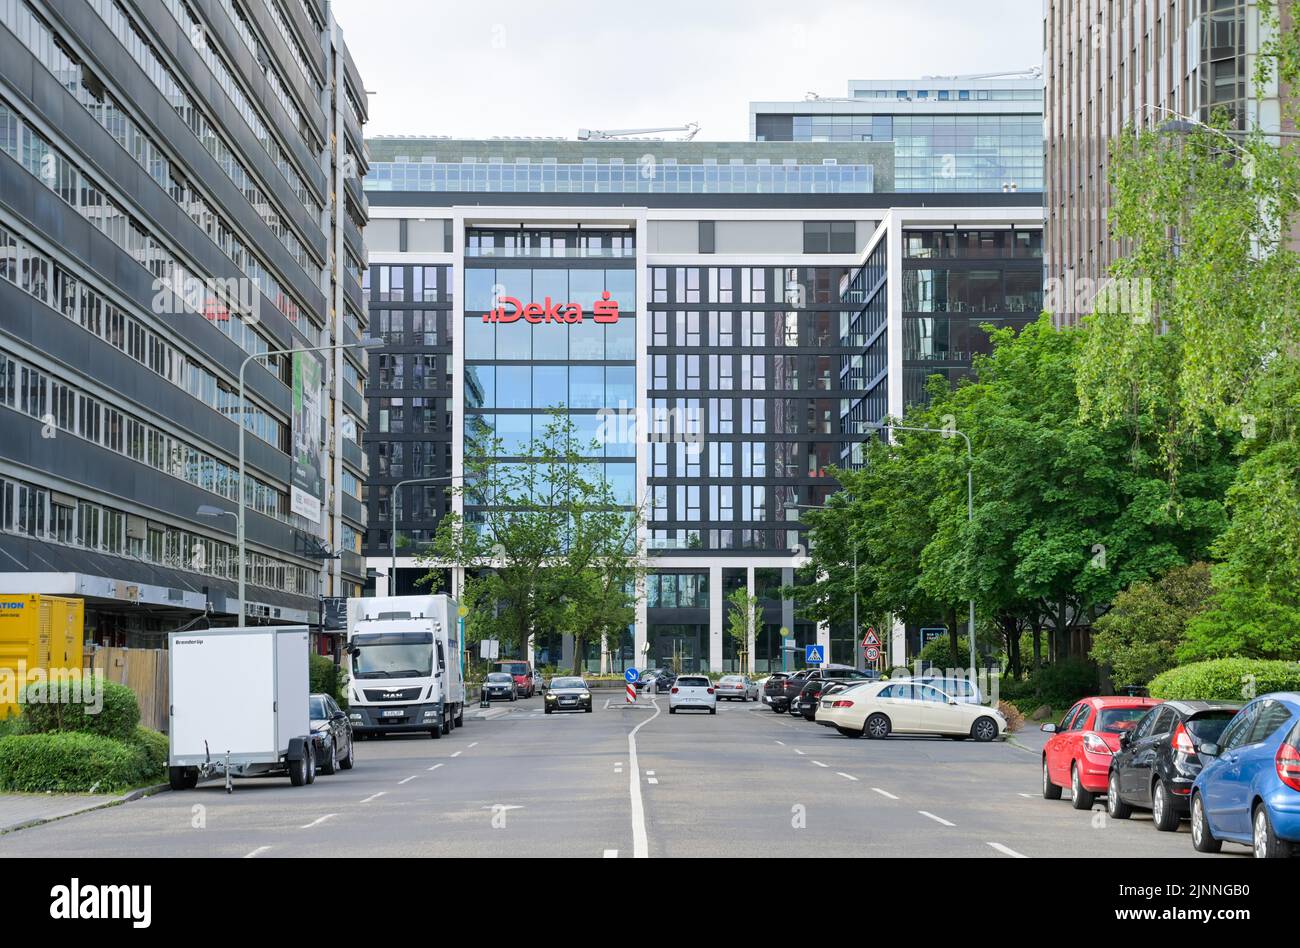 Deka Bank, Lyoner Strasse, Lyoner Quartier, Niederrad, Frankfurt am Main, Hesse, Germany Stock Photo